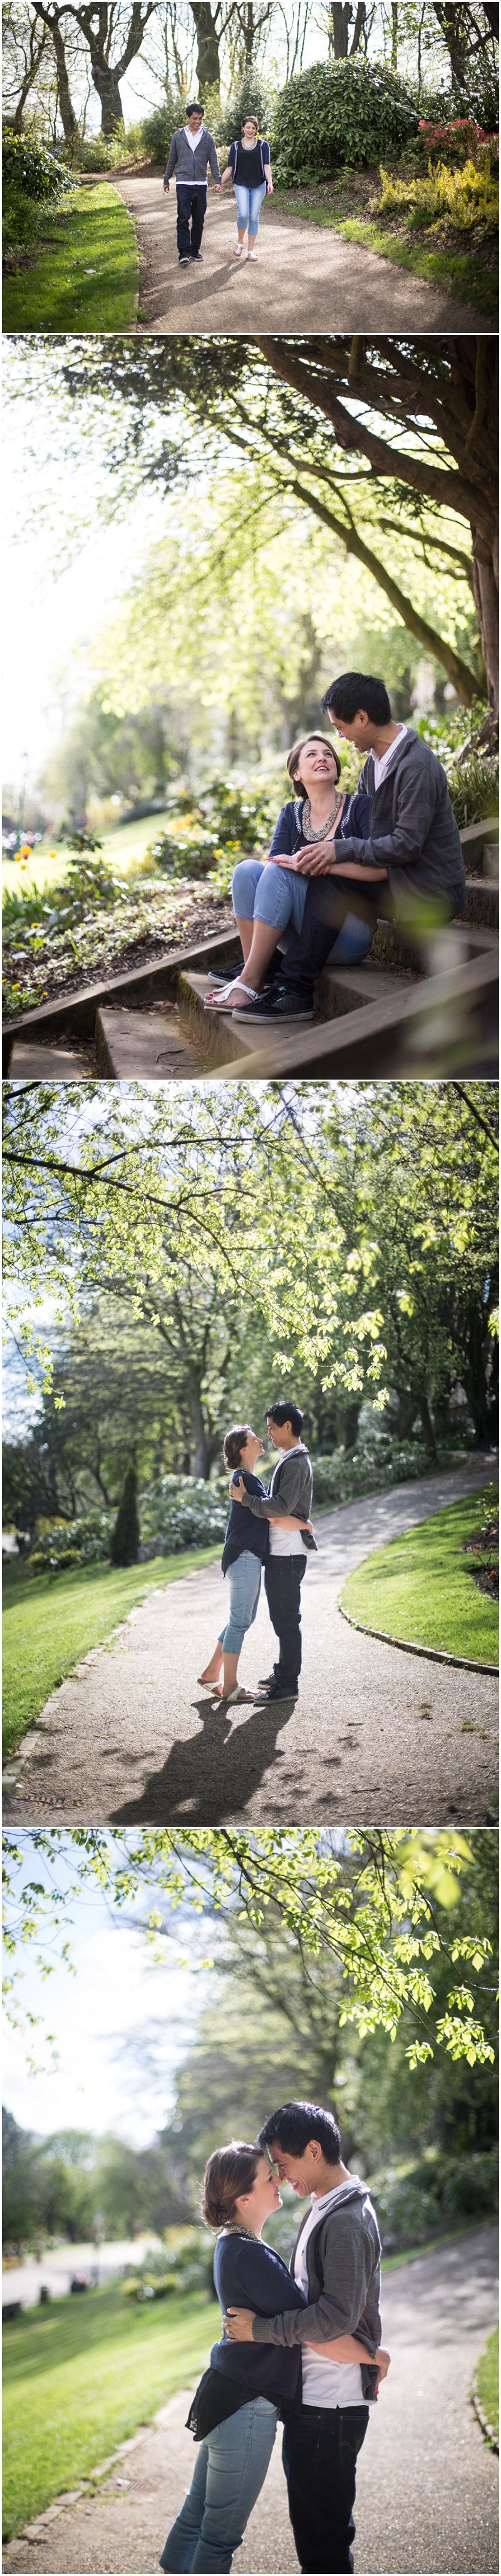 Couple in Avenham Park on gorgeous spring day photo shoot